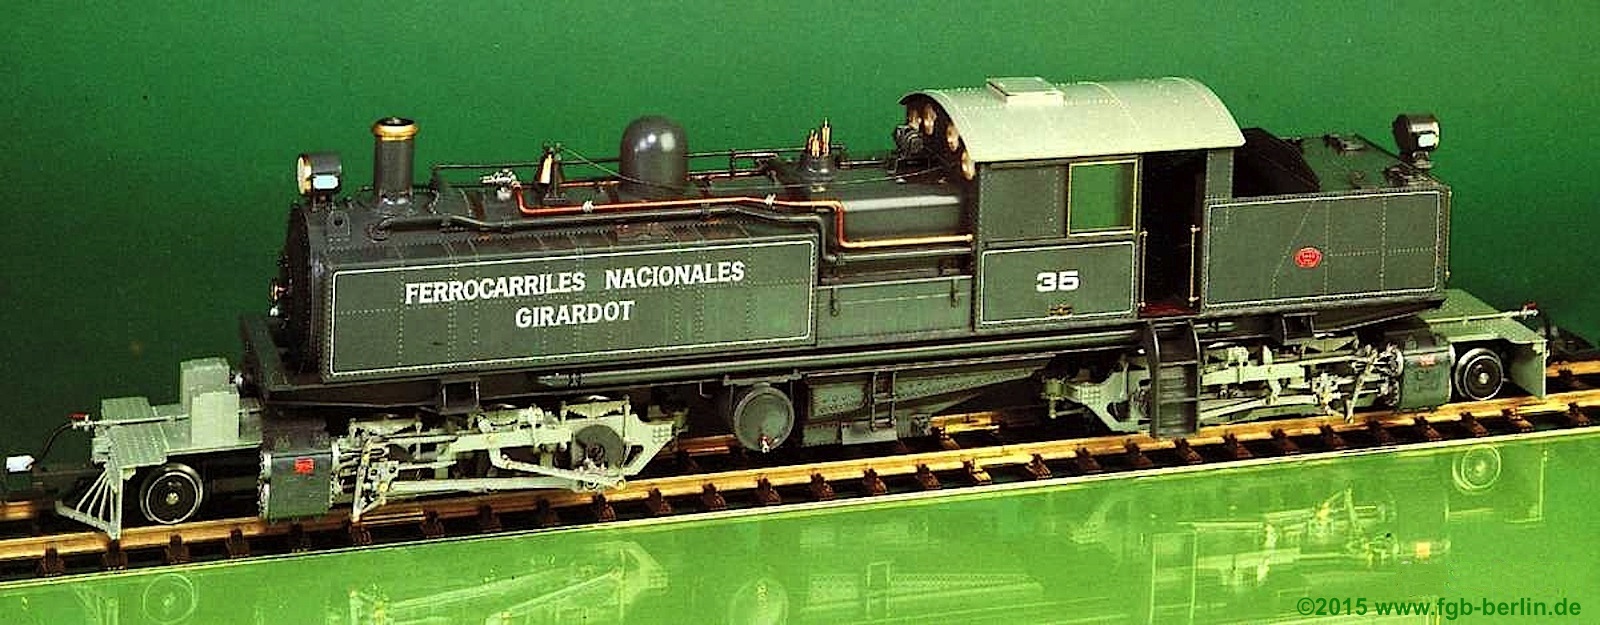 Magnus Girardot Railway of Colombia Dampflokomotive (Steam Locomotive) 35